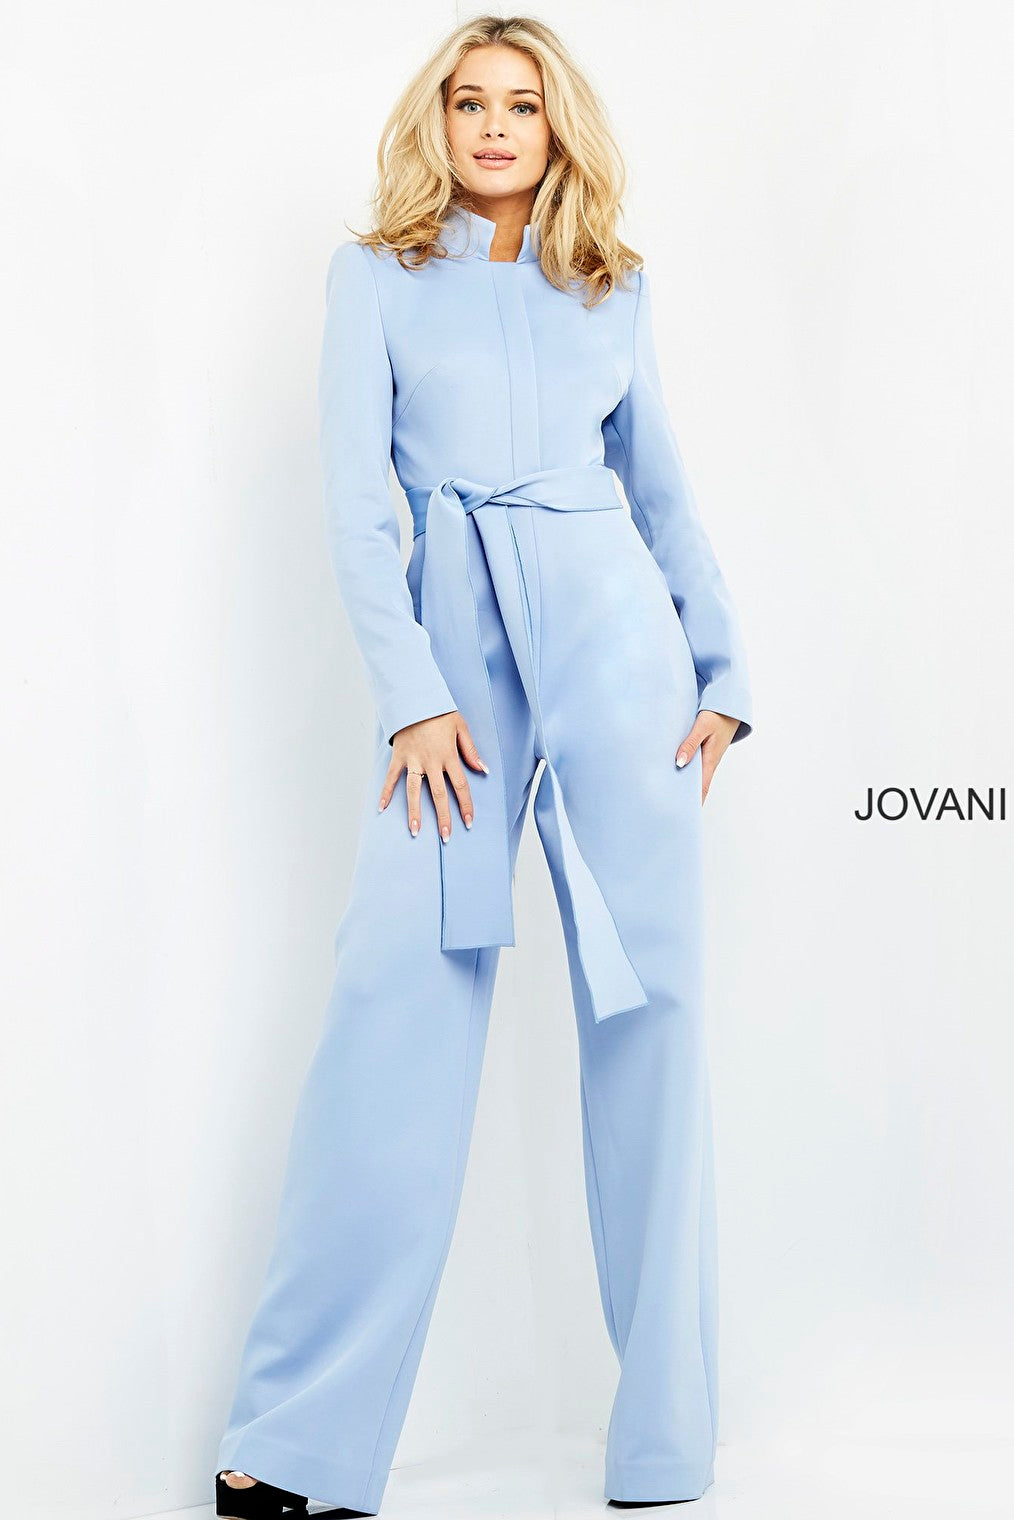 Light blue high neck on trend Jovani jumpsuit 06205